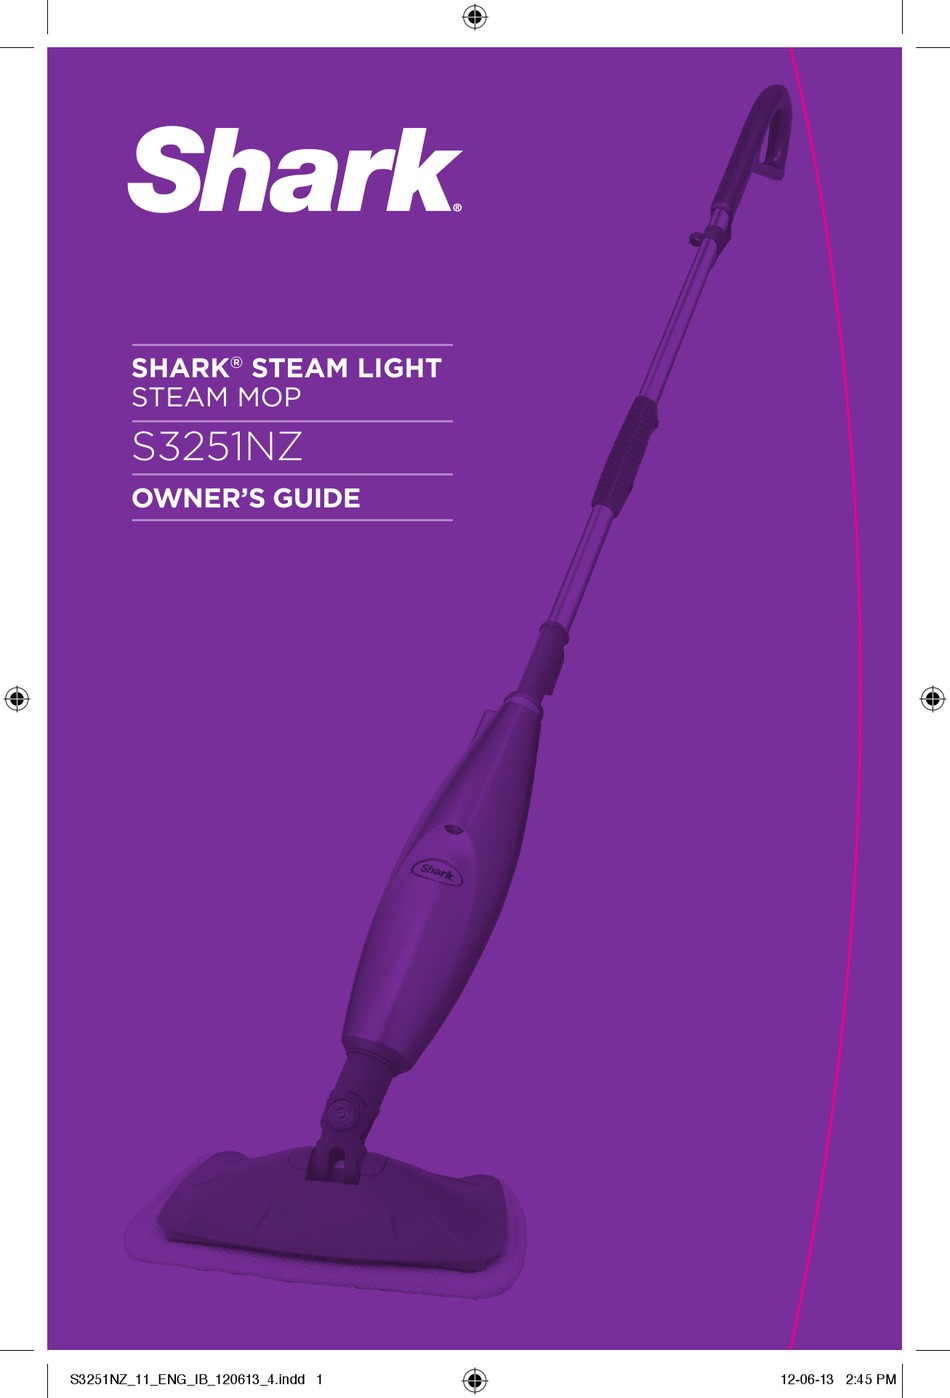 SHARK STEAM LIGHT S3251NZ OWNER'S MANUAL Pdf Download | ManualsLib